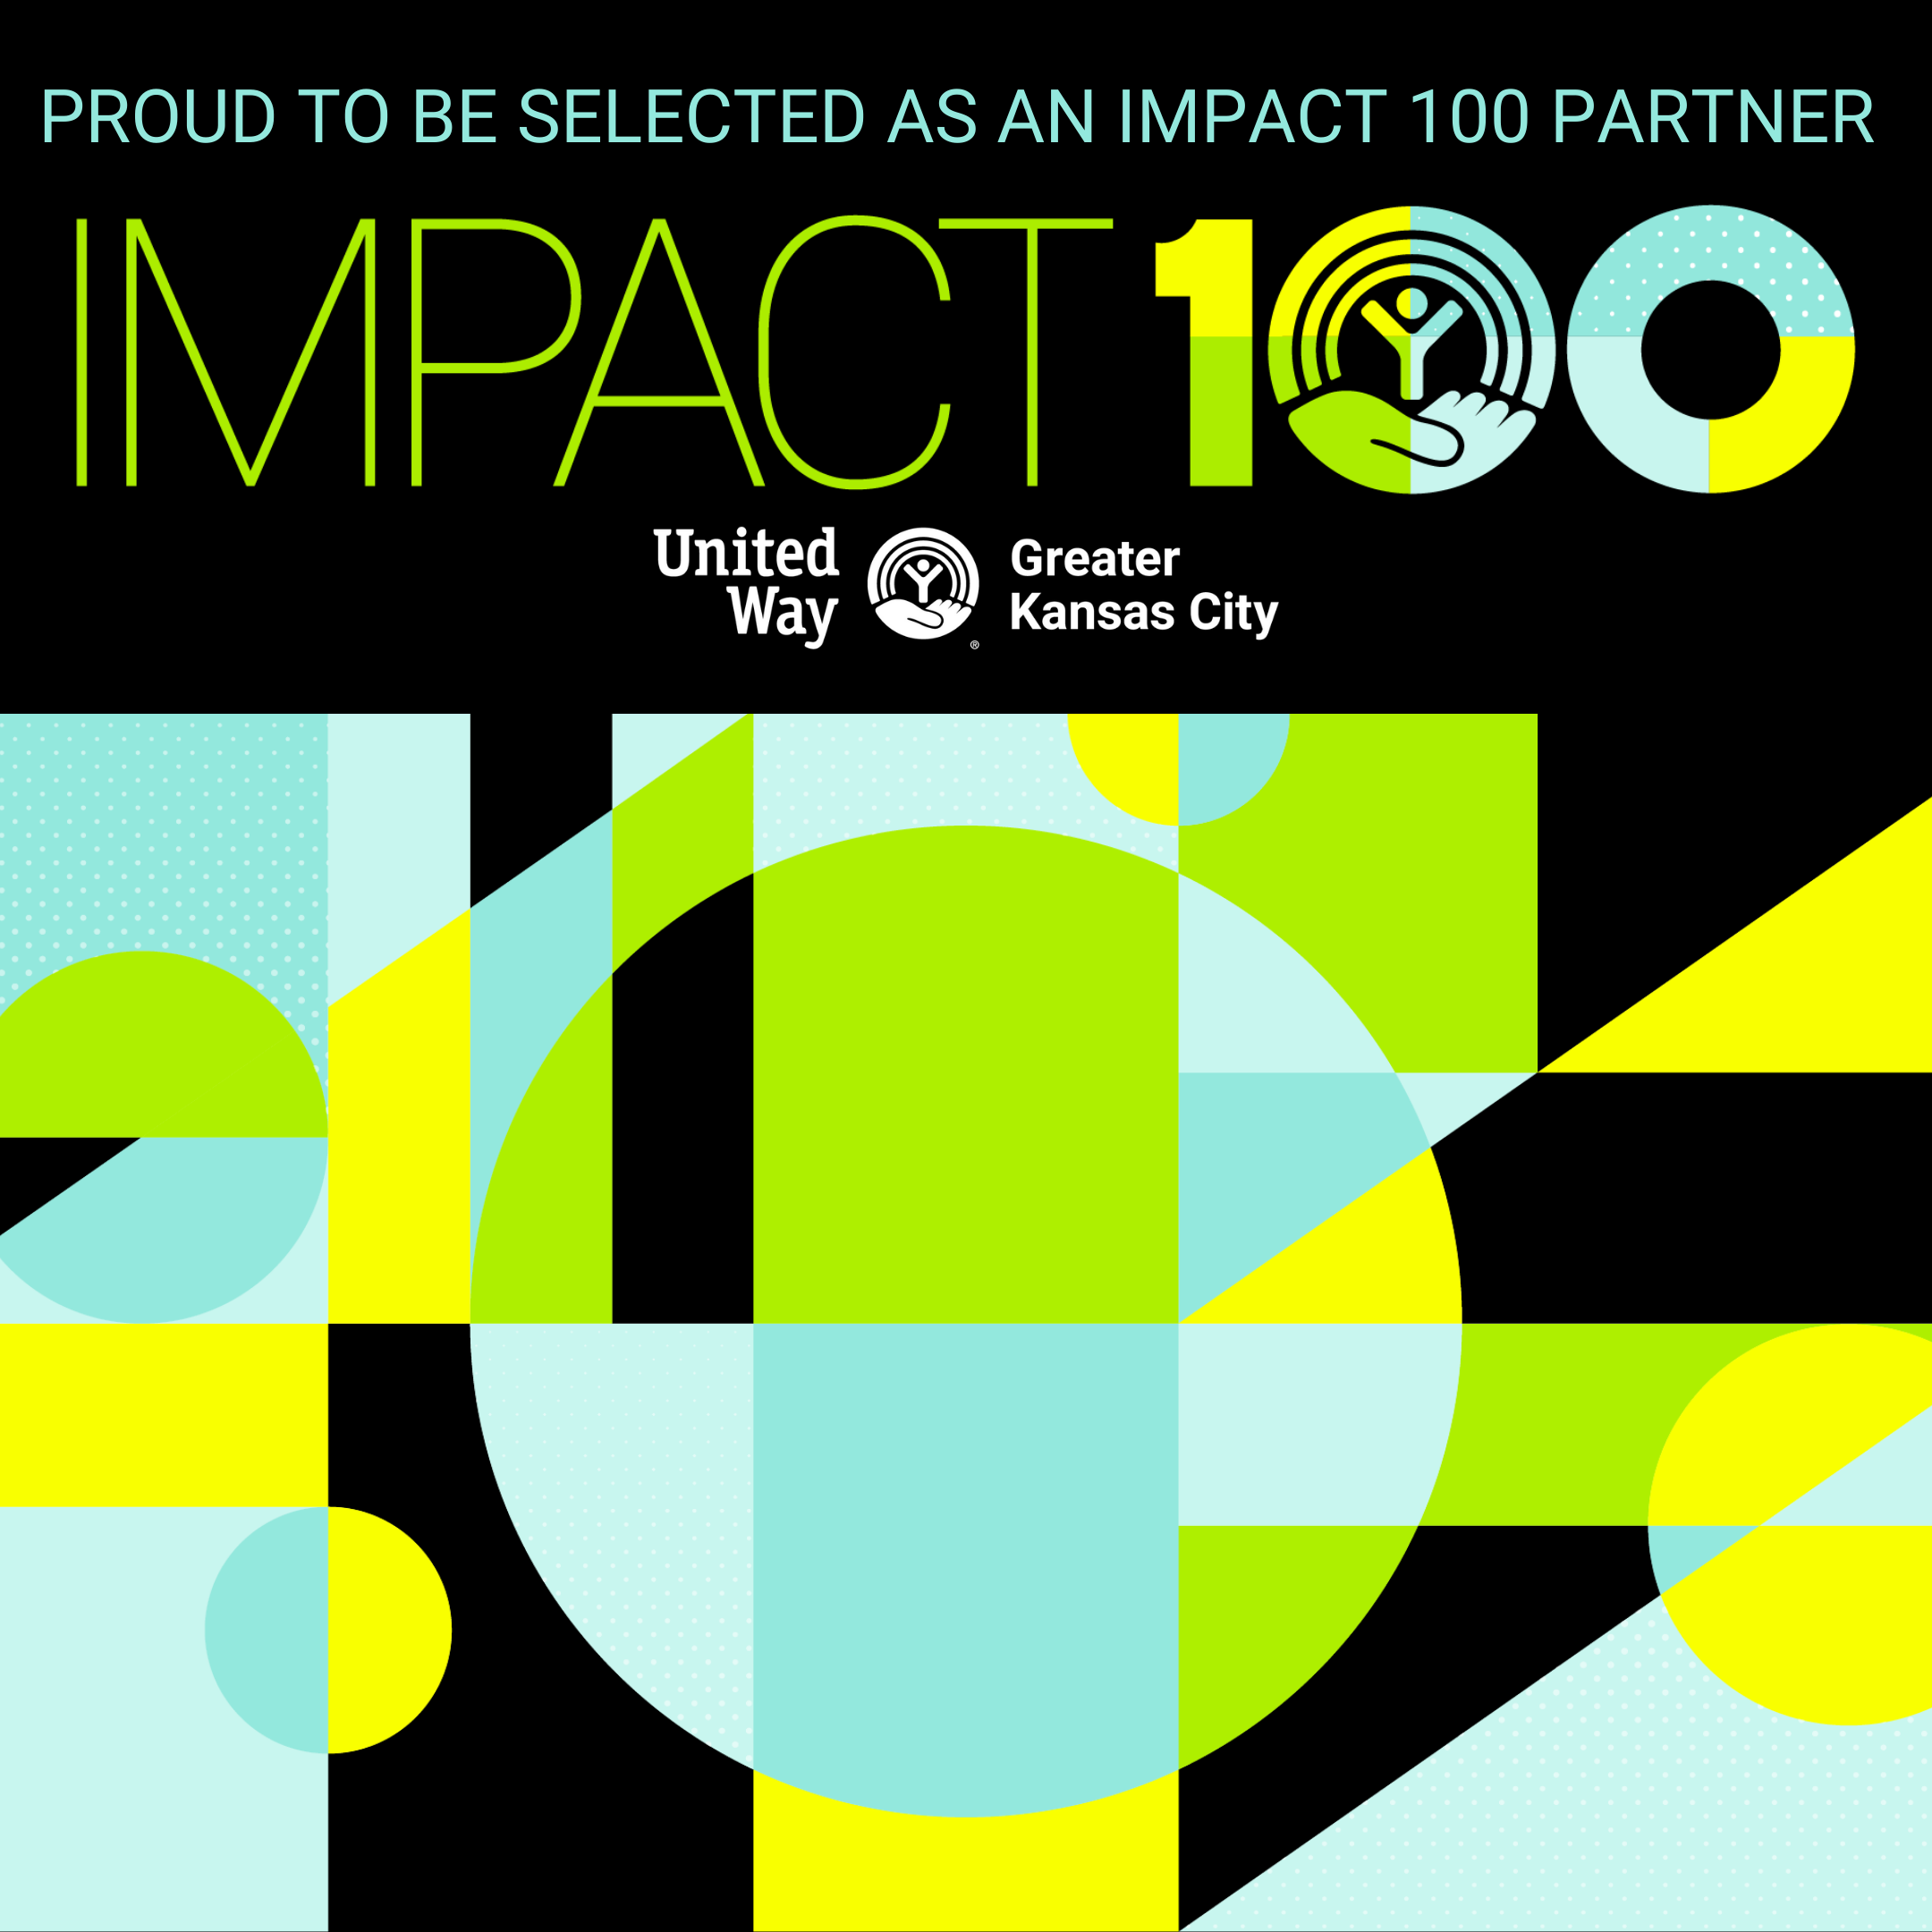 Three Years Running: Beacon Mental Health Named Impact 100 Partner by United Way of Greater Kansas City